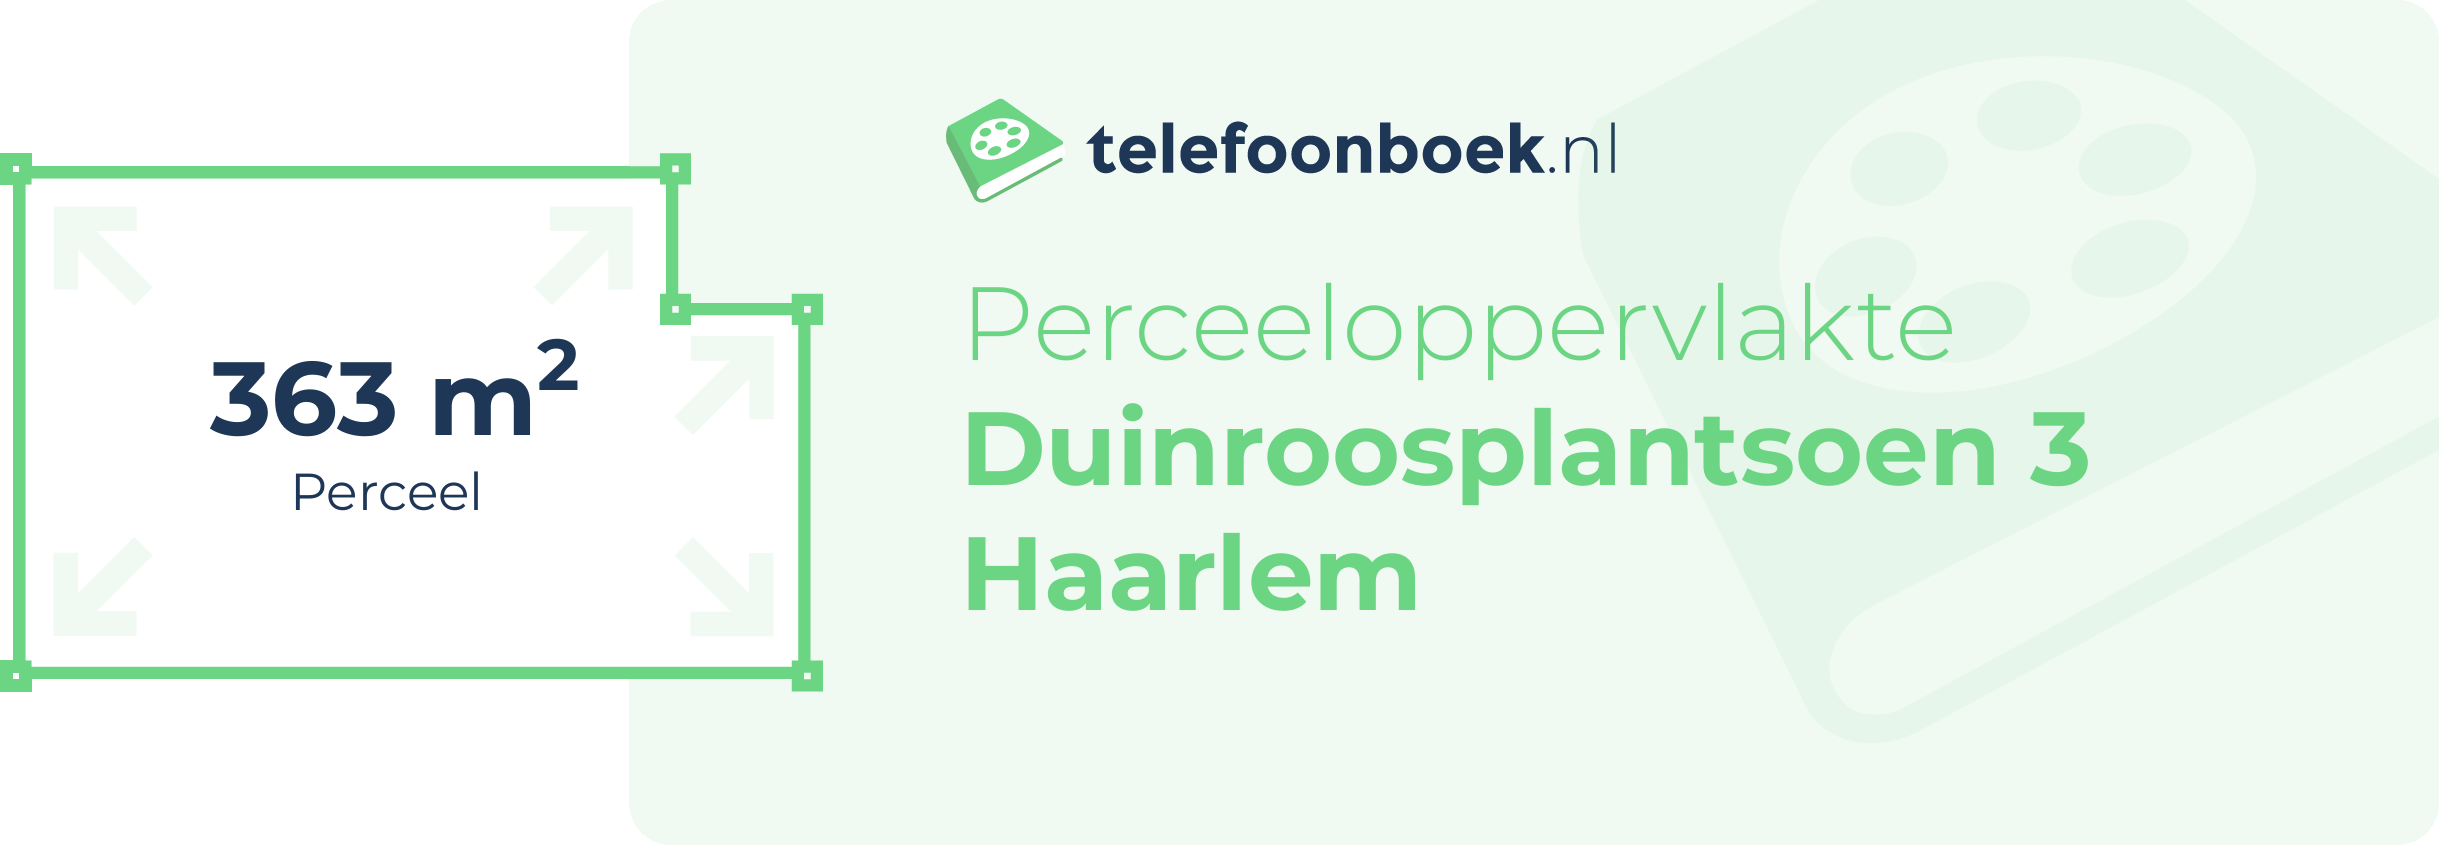 Perceeloppervlakte Duinroosplantsoen 3 Haarlem